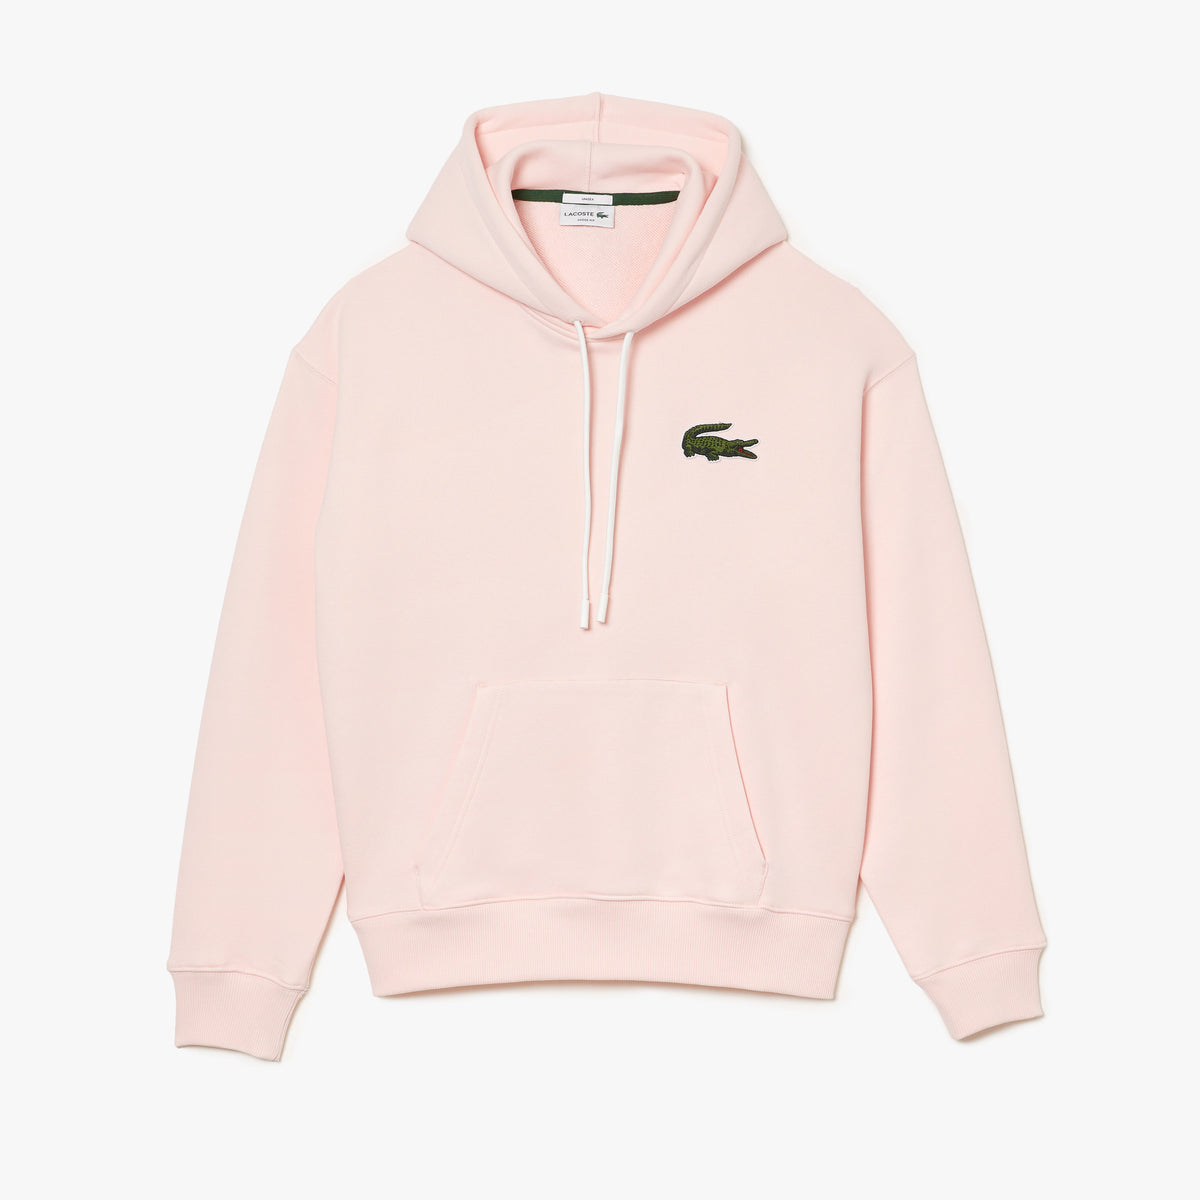 Lacoste - Loose Fit Hooded Sweatshirt - Light Pink